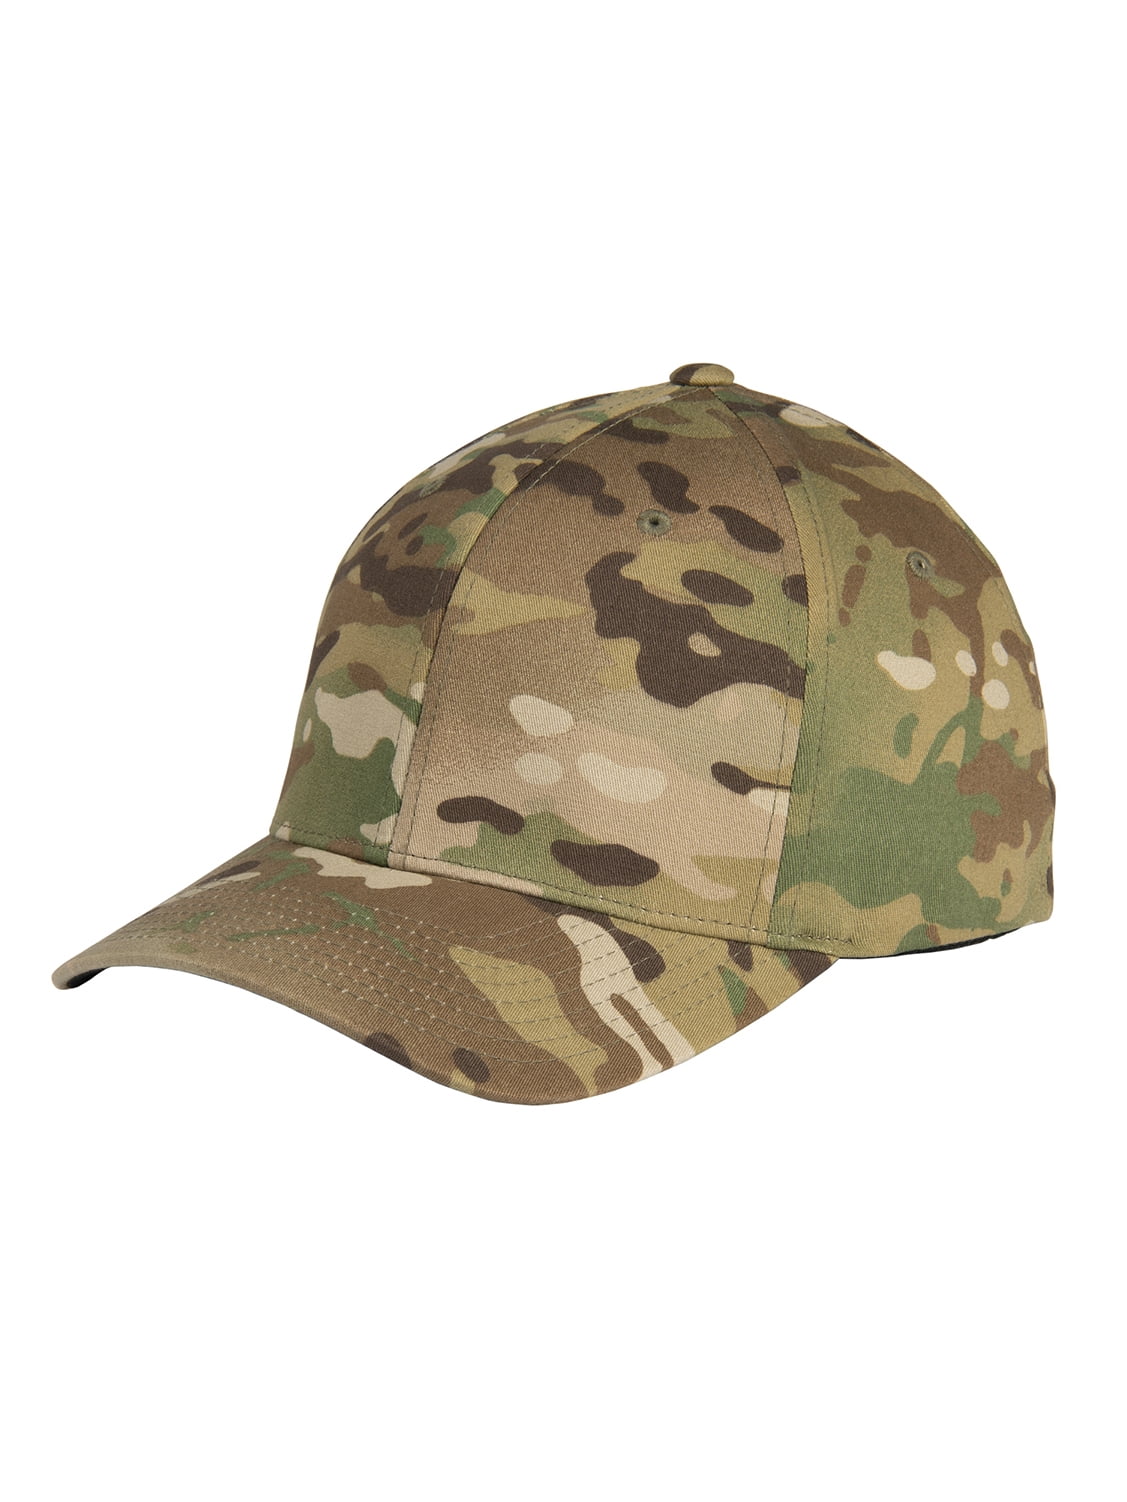 Fit Flex - Drab/Green Top - Cap Headwear Large/X-Large Olive Baseball